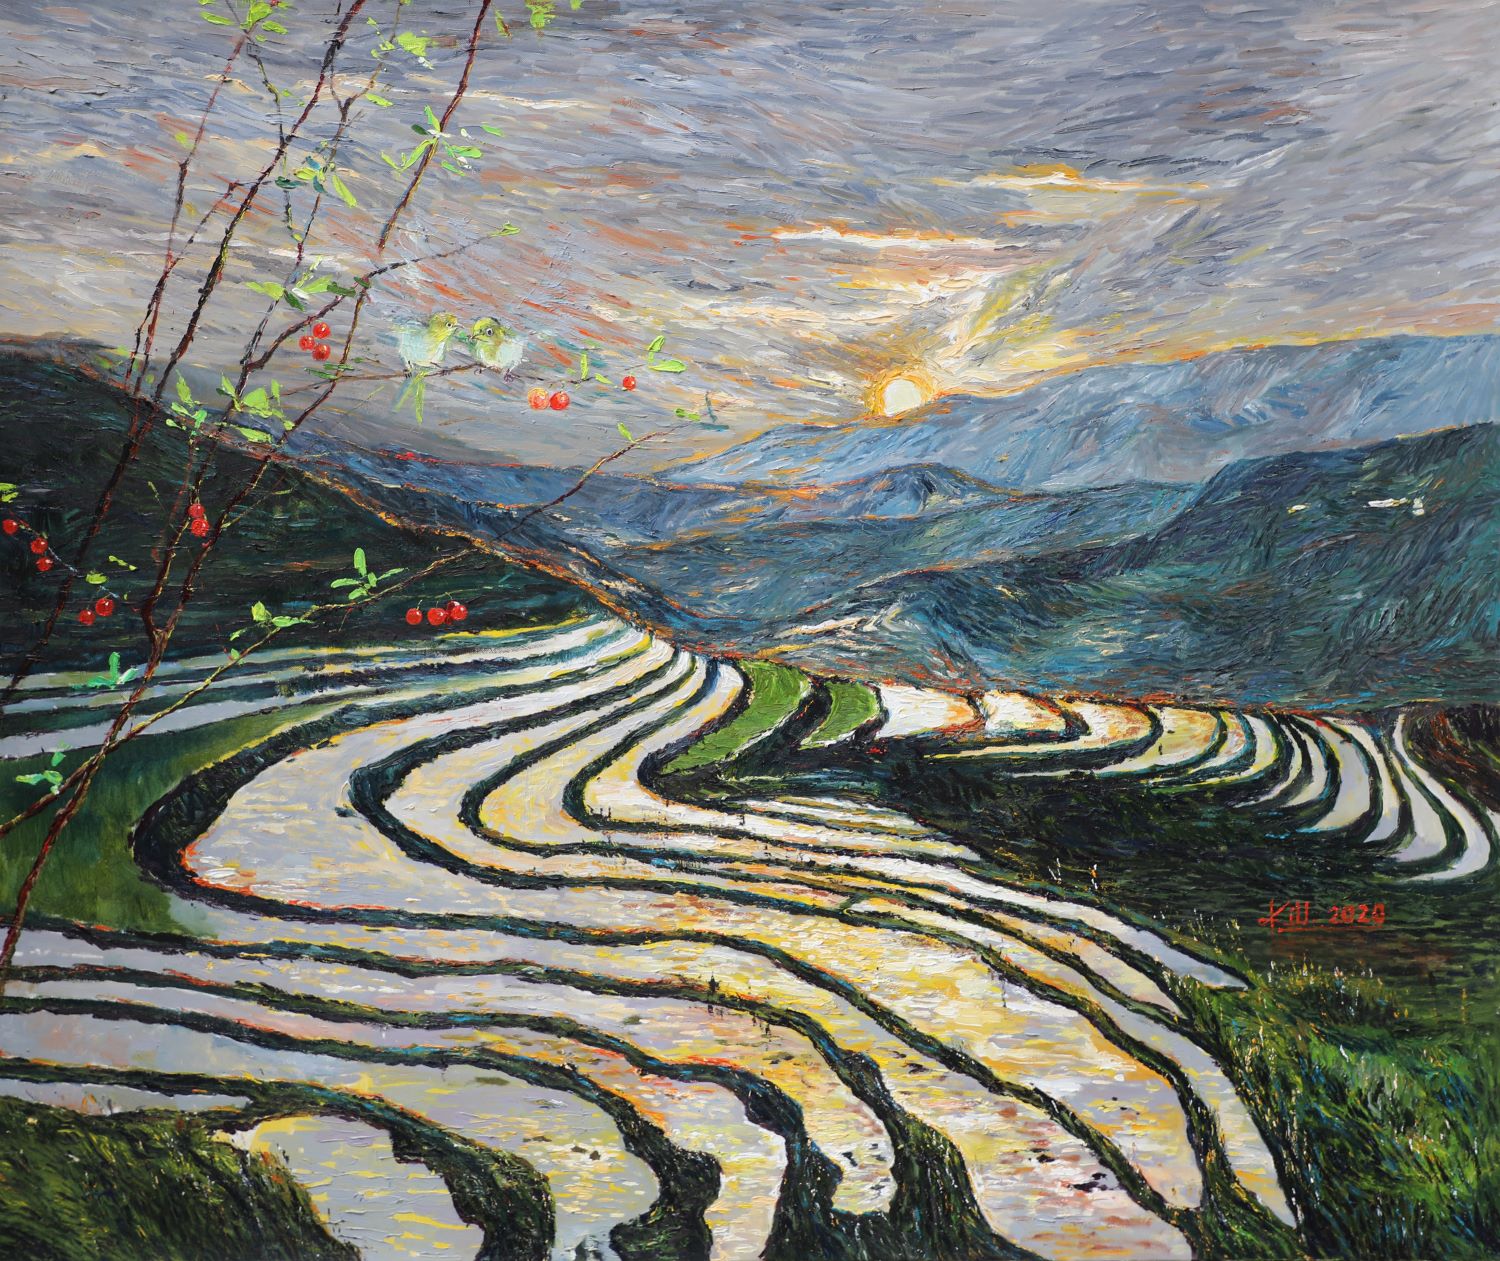 Dawn at the Terrace - Vietnamese Oil Painting by Artist Mai Thi Kim Uyen